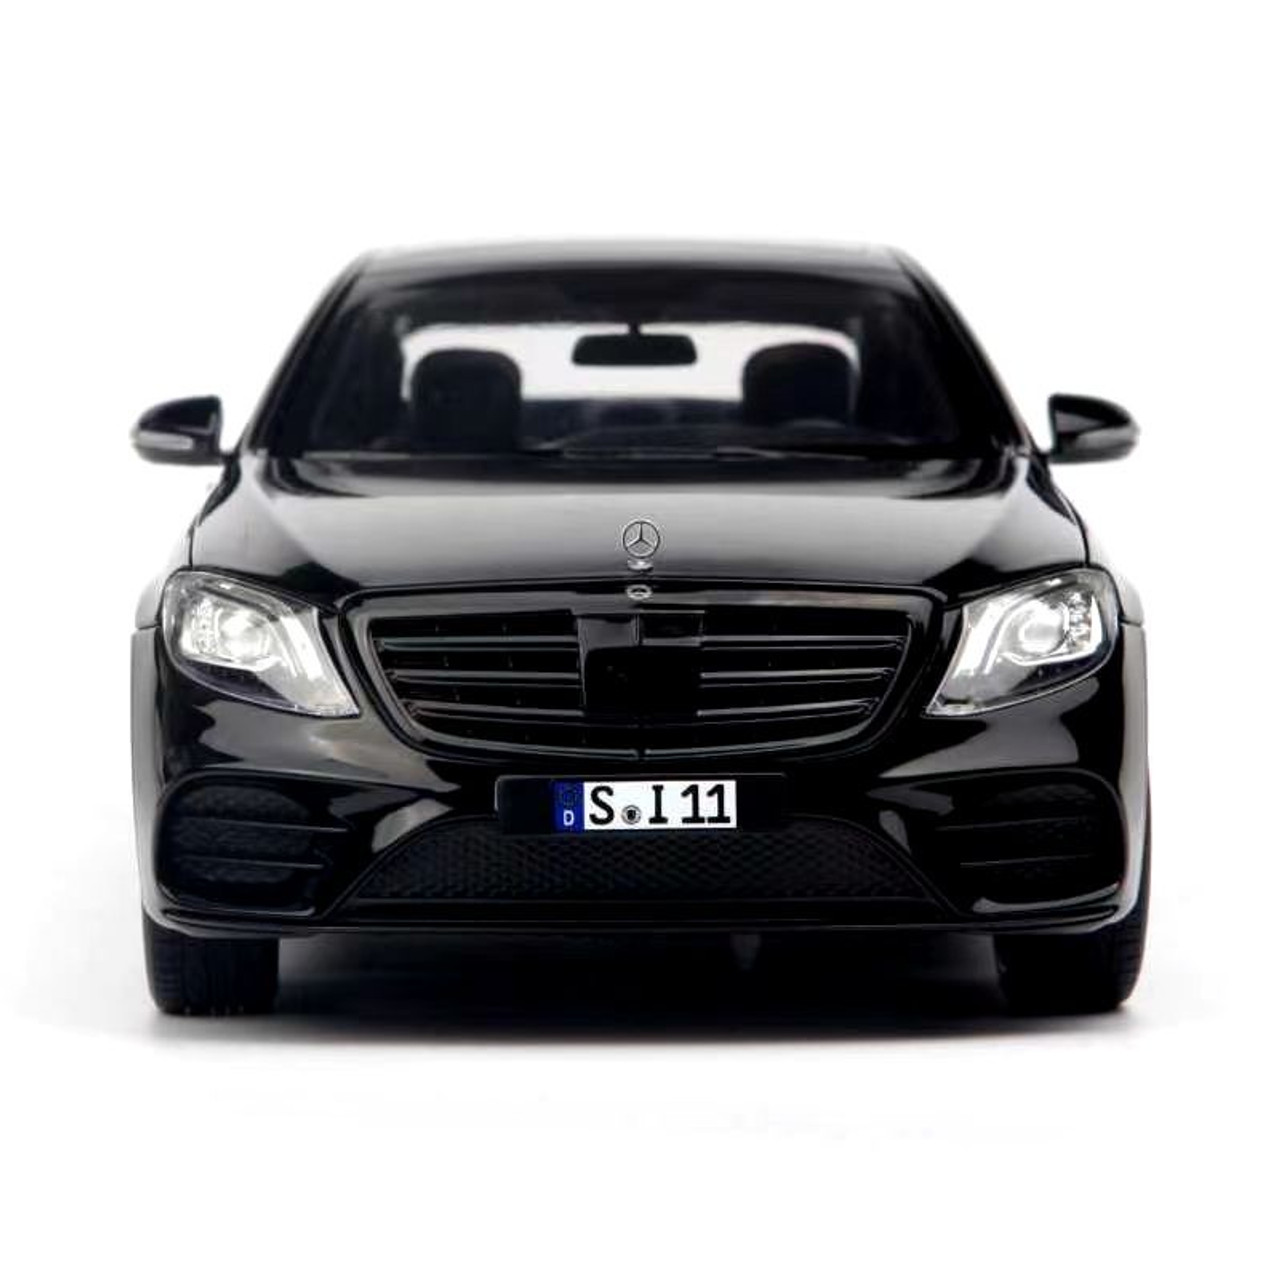 1/18 Norev 2018 Mercedes-Benz Mercedes S-Class S-Klass AMG Line (Black w/ Black Wheels) Diecast Car Model